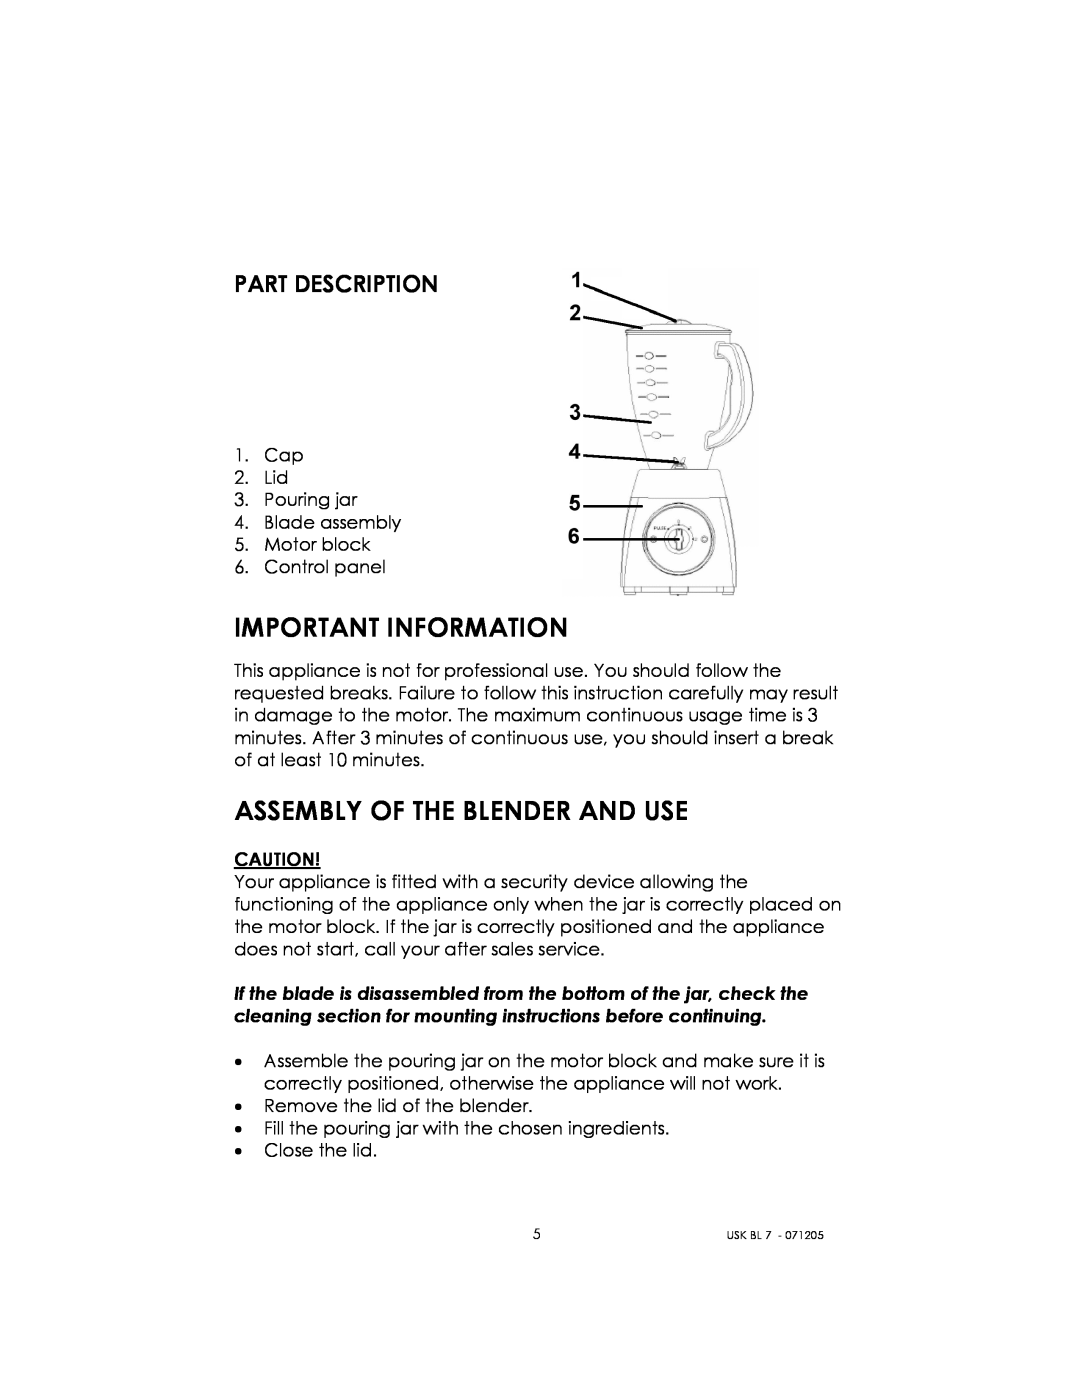 Kalorik USK BL 7 manual Important Information, Assembly Of The Blender And Use, Part Description 